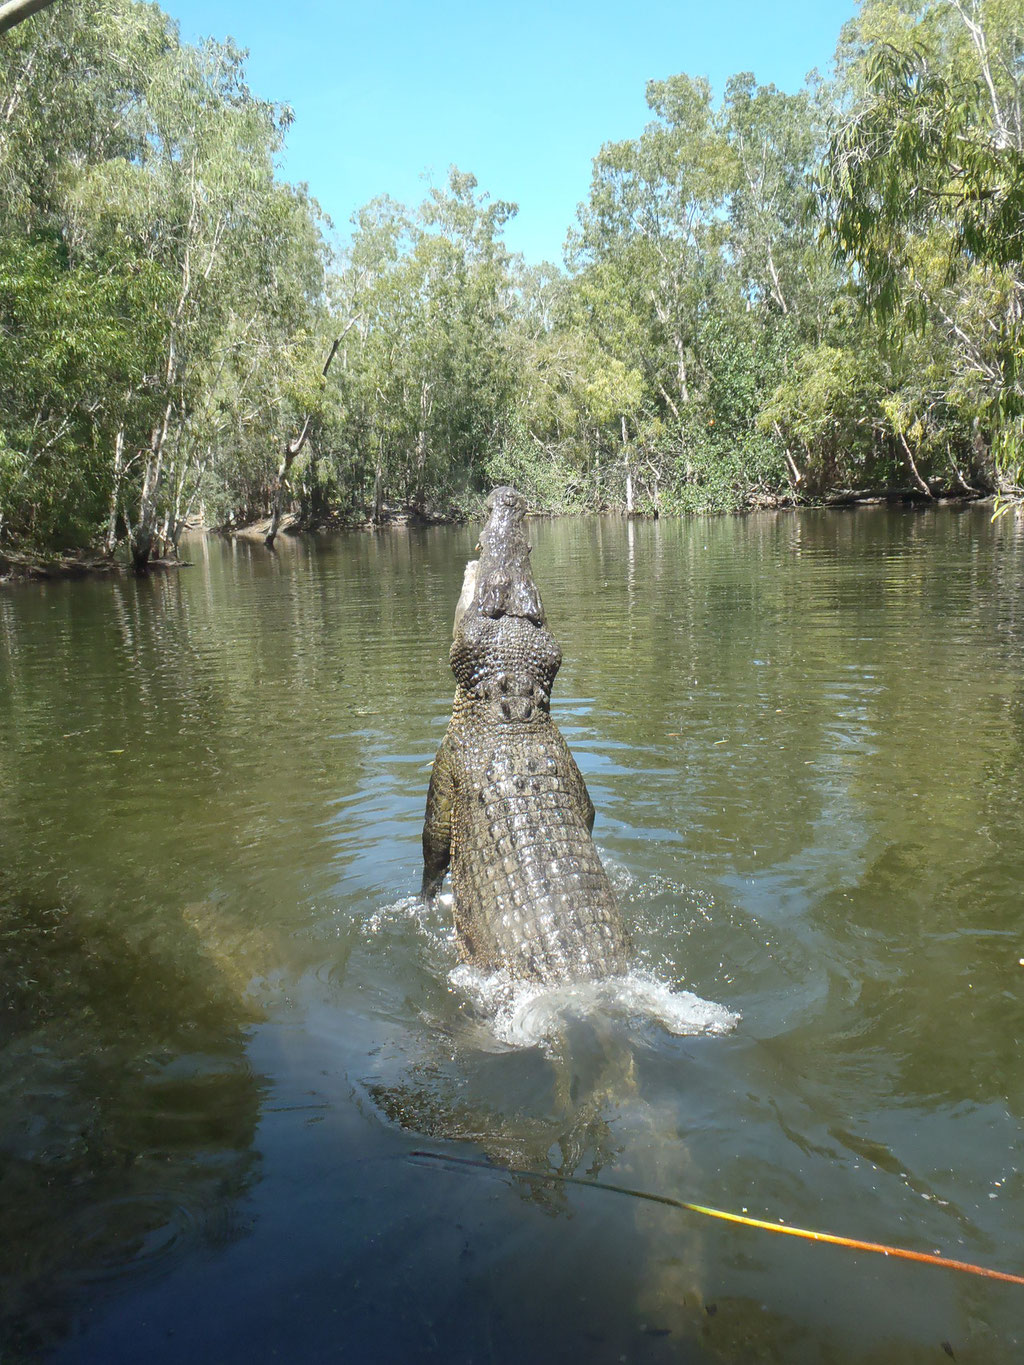 les crocodiles peuvent sauter 3 mètres hors de l'eau !